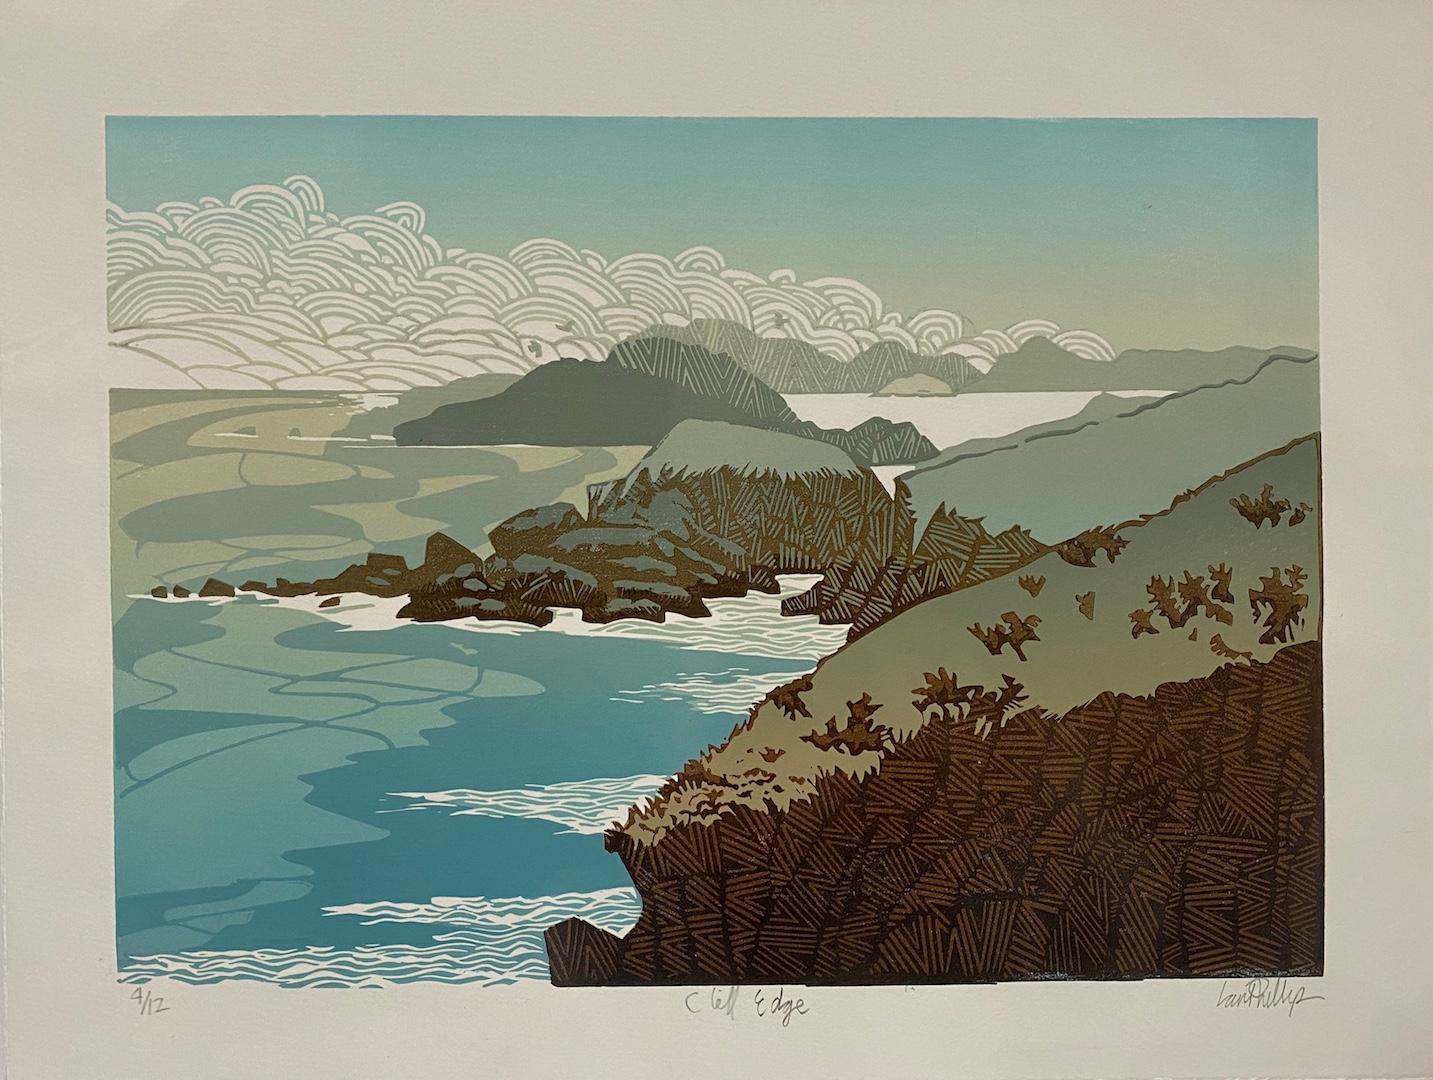 Cliff Edge, Seascape Art, Cliff Art, Blue and Green Seascape Art, Coastal Art - Contemporary Print by Ian Phillips